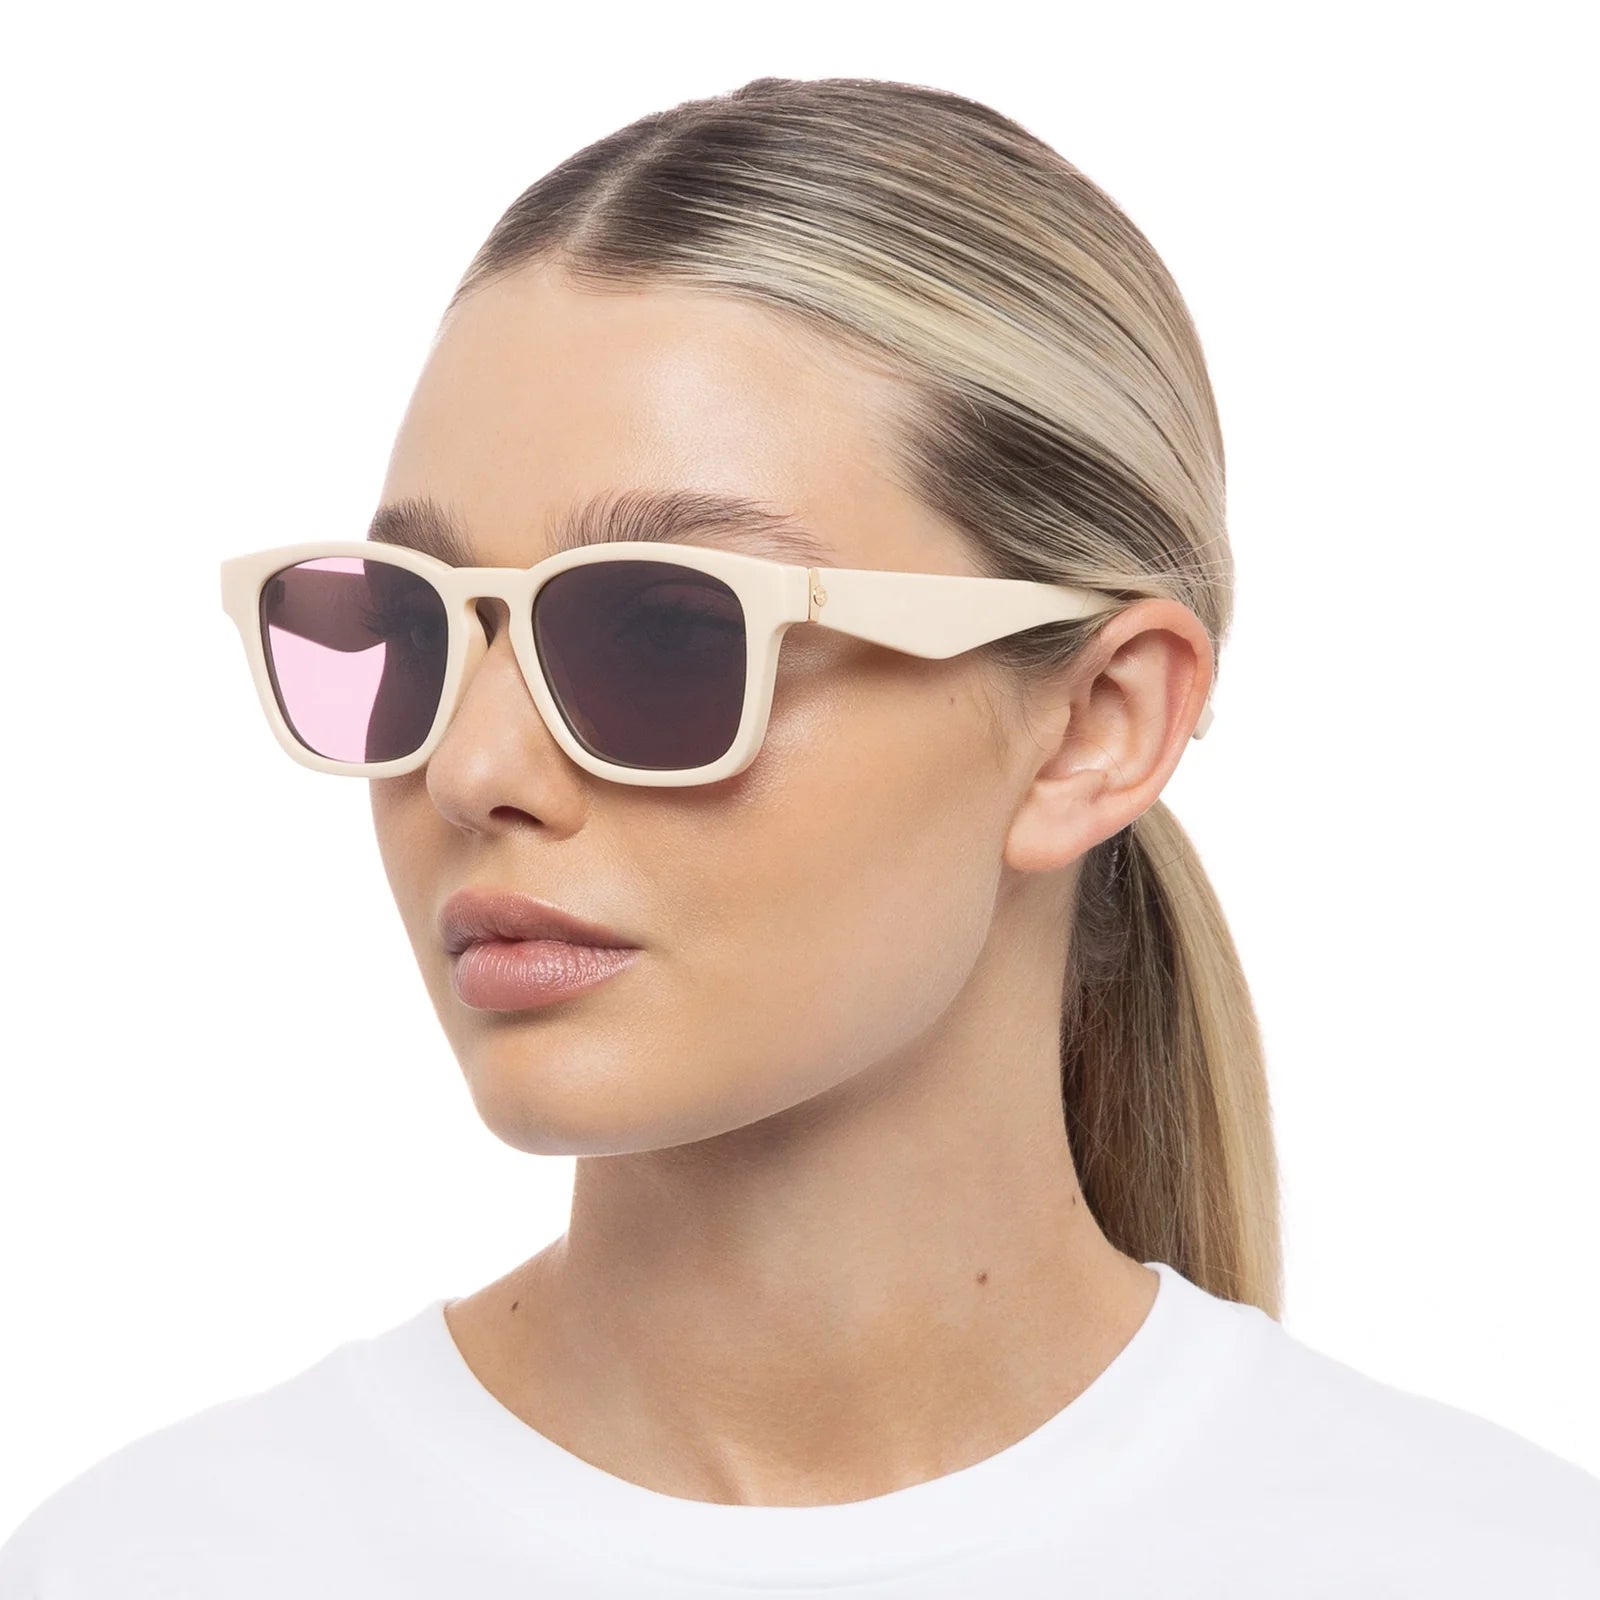 Le Sustain Sunglasses - Players Playa